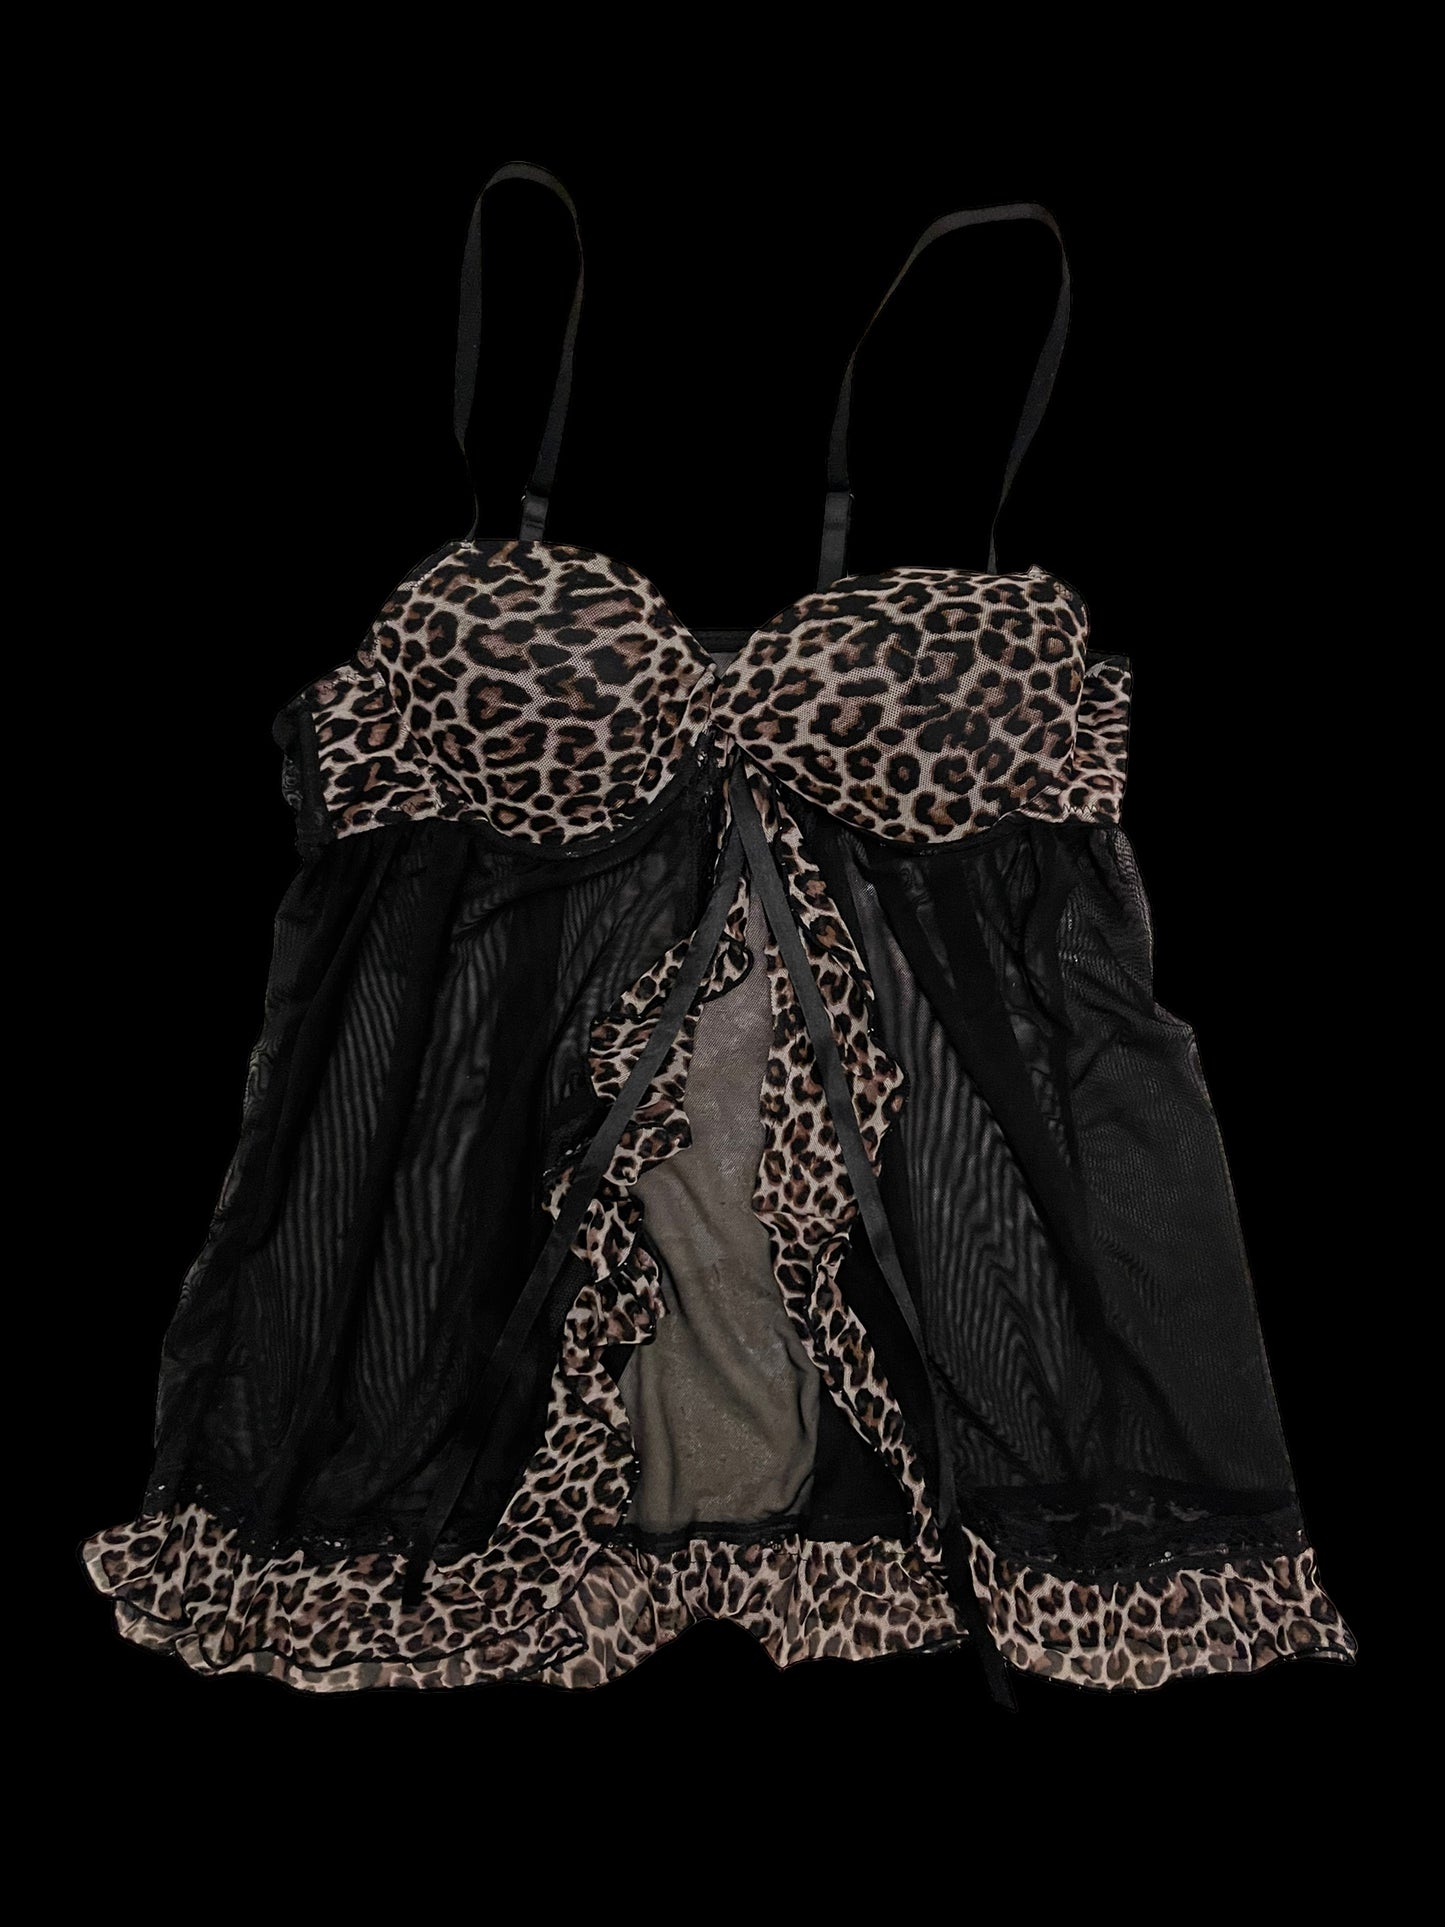 Cheetah print babydoll lingerie top